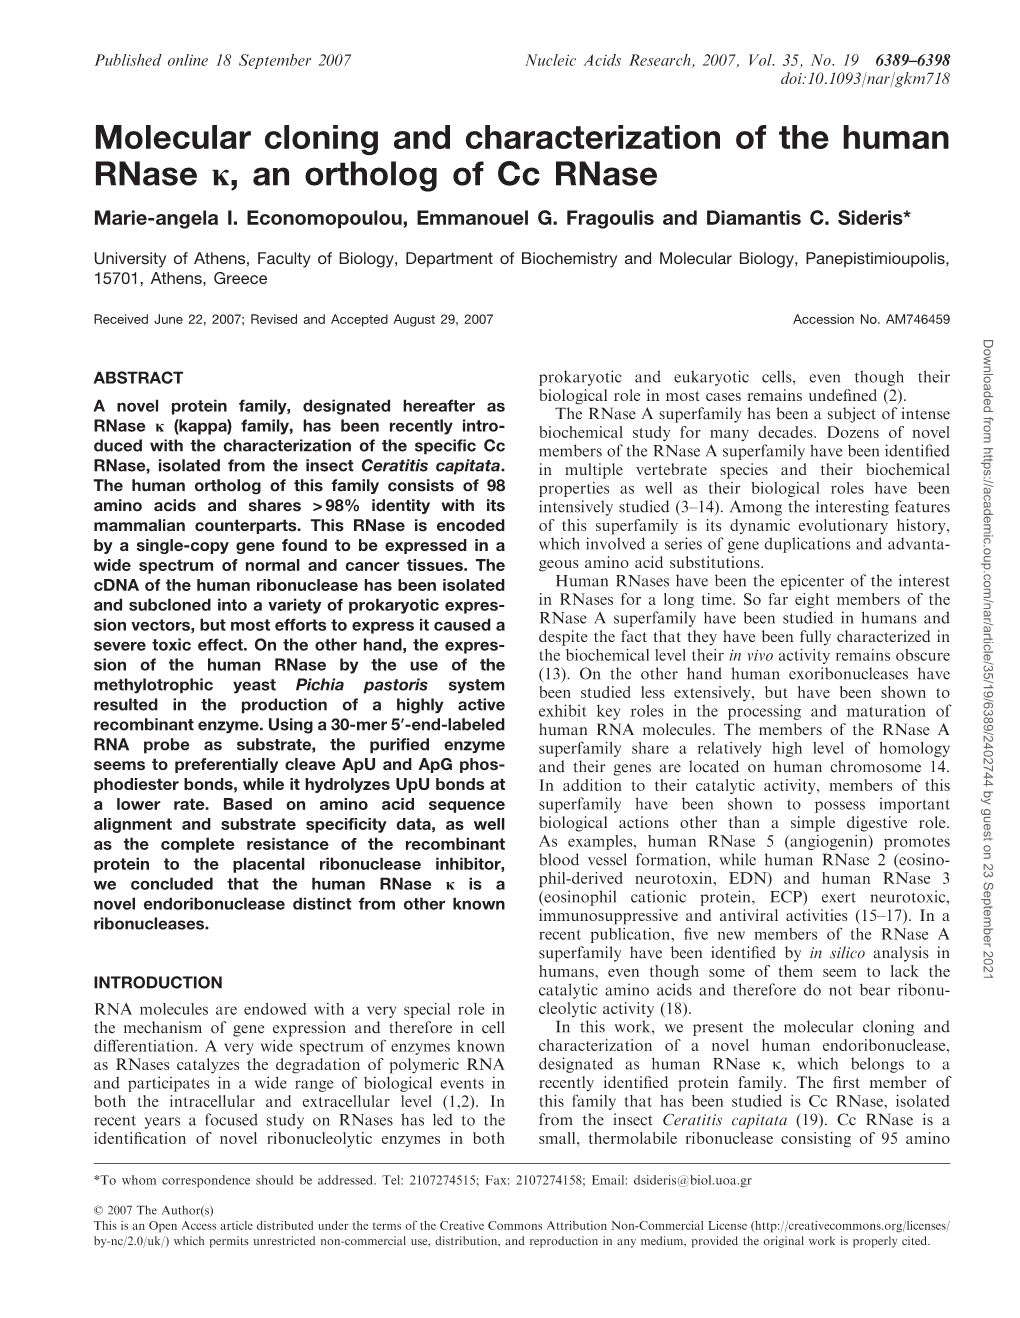 Molecular Cloning and Characterization of the Human Rnase I, an Ortholog of Cc Rnase Marie-Angela I